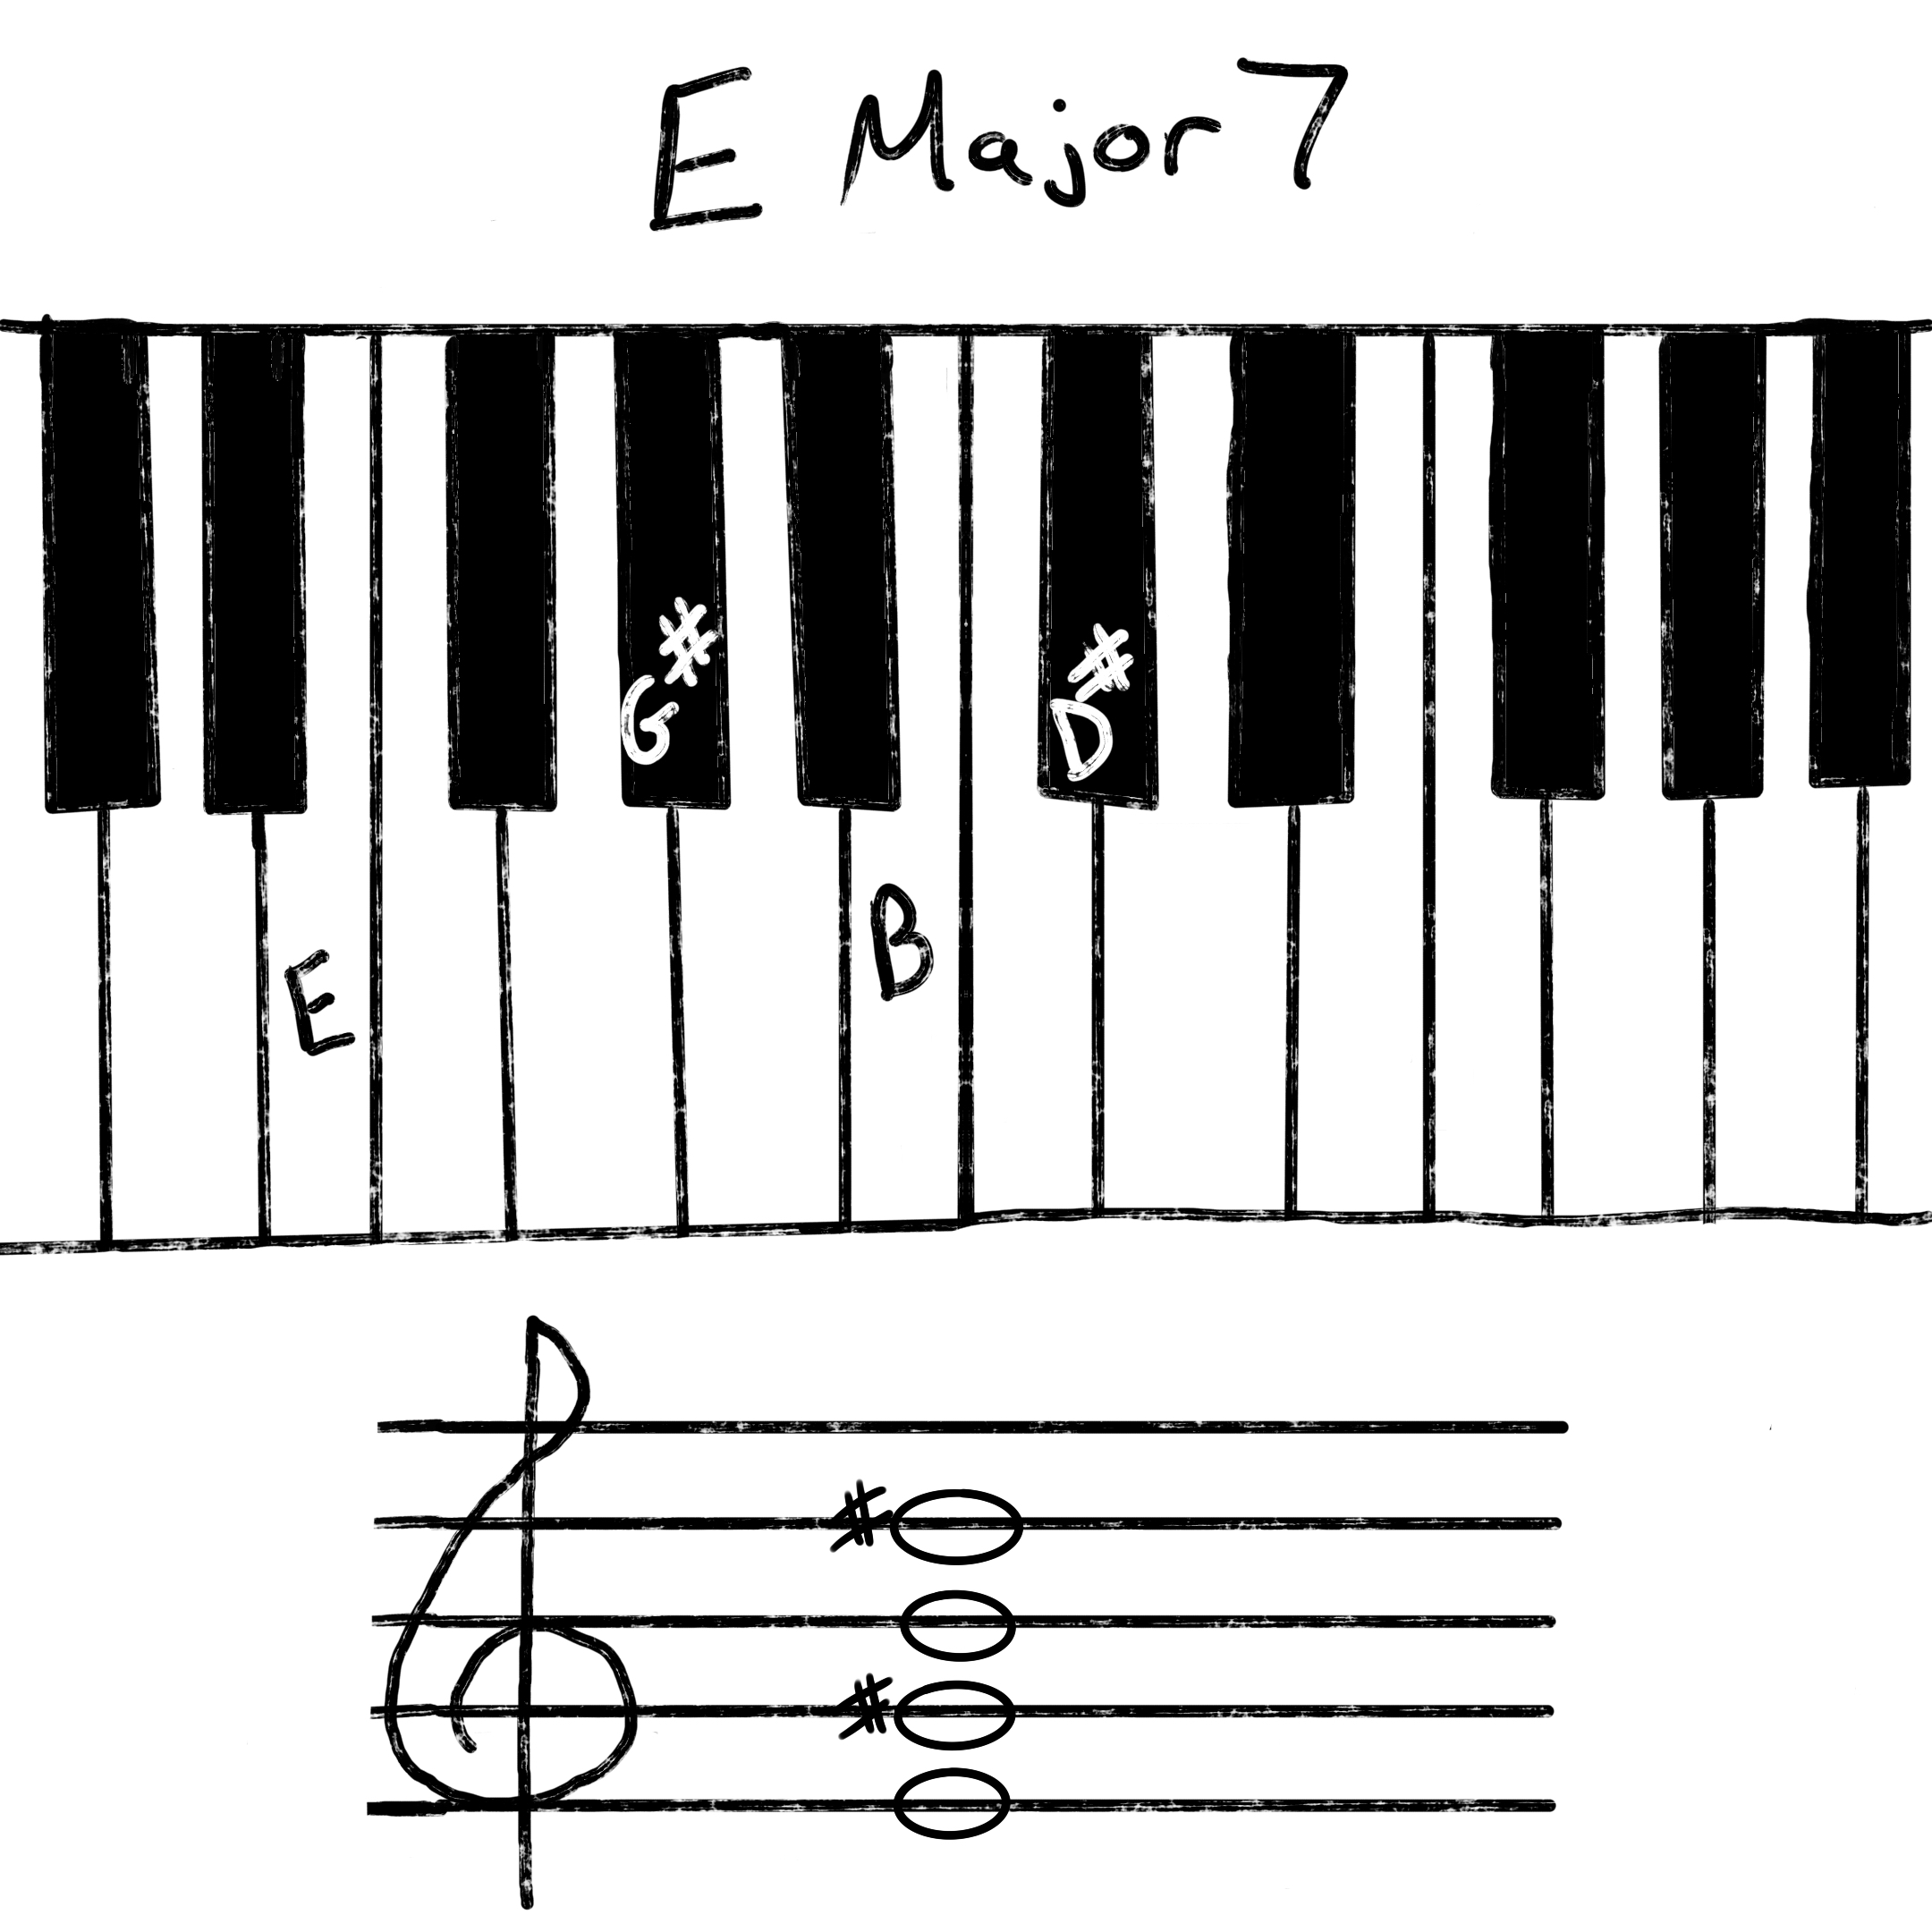 E major 7 chord or E7